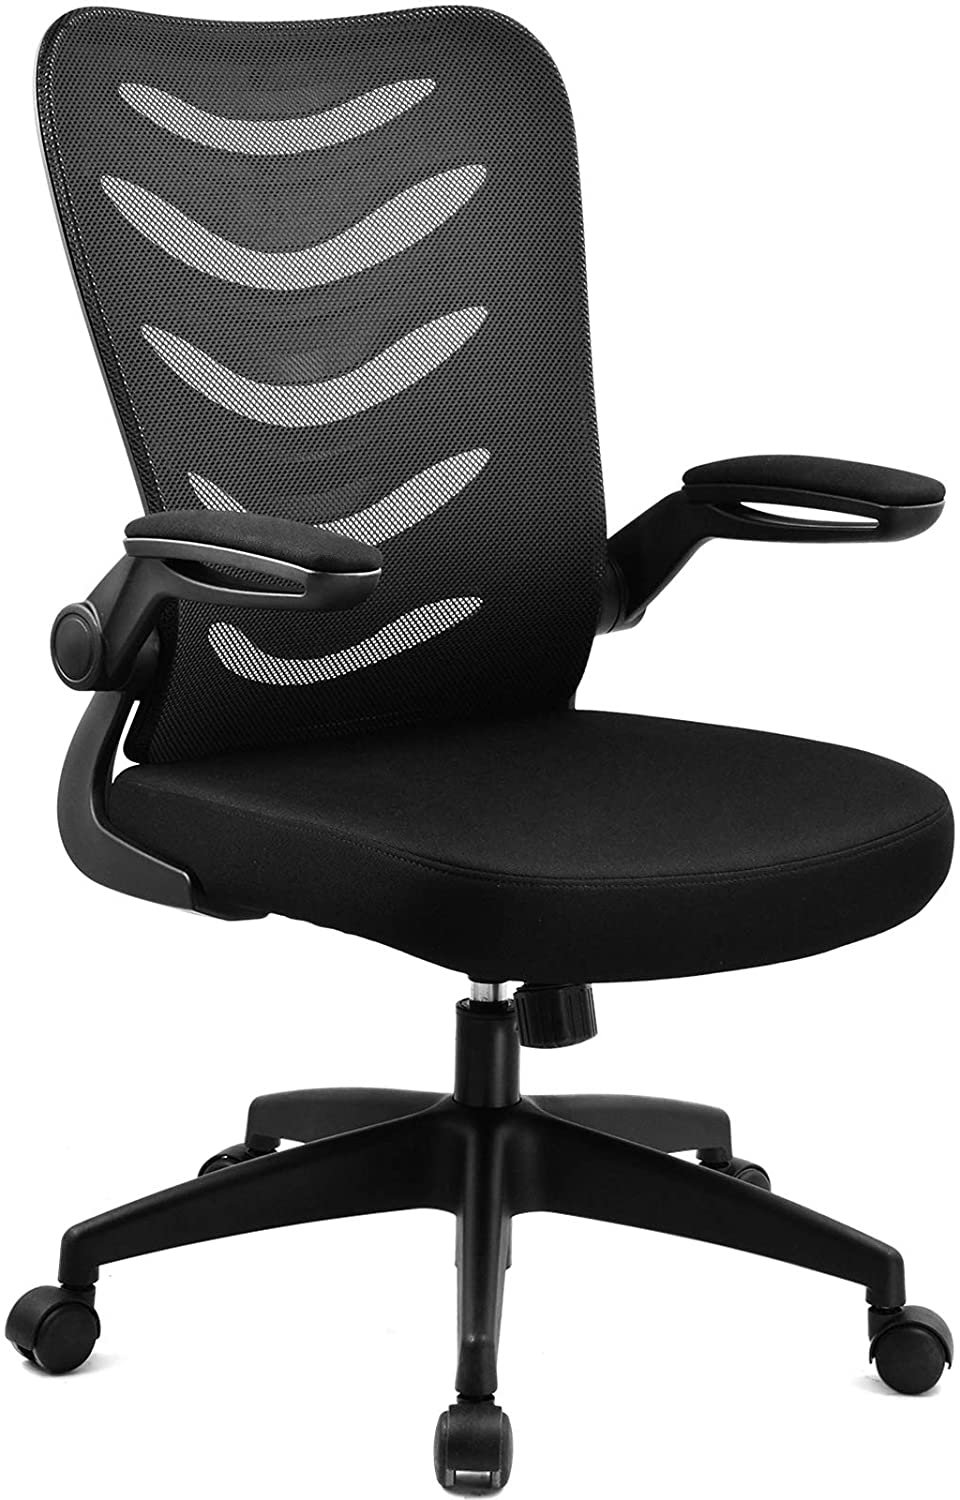 COMHOMA Ergonomic Office Chair 